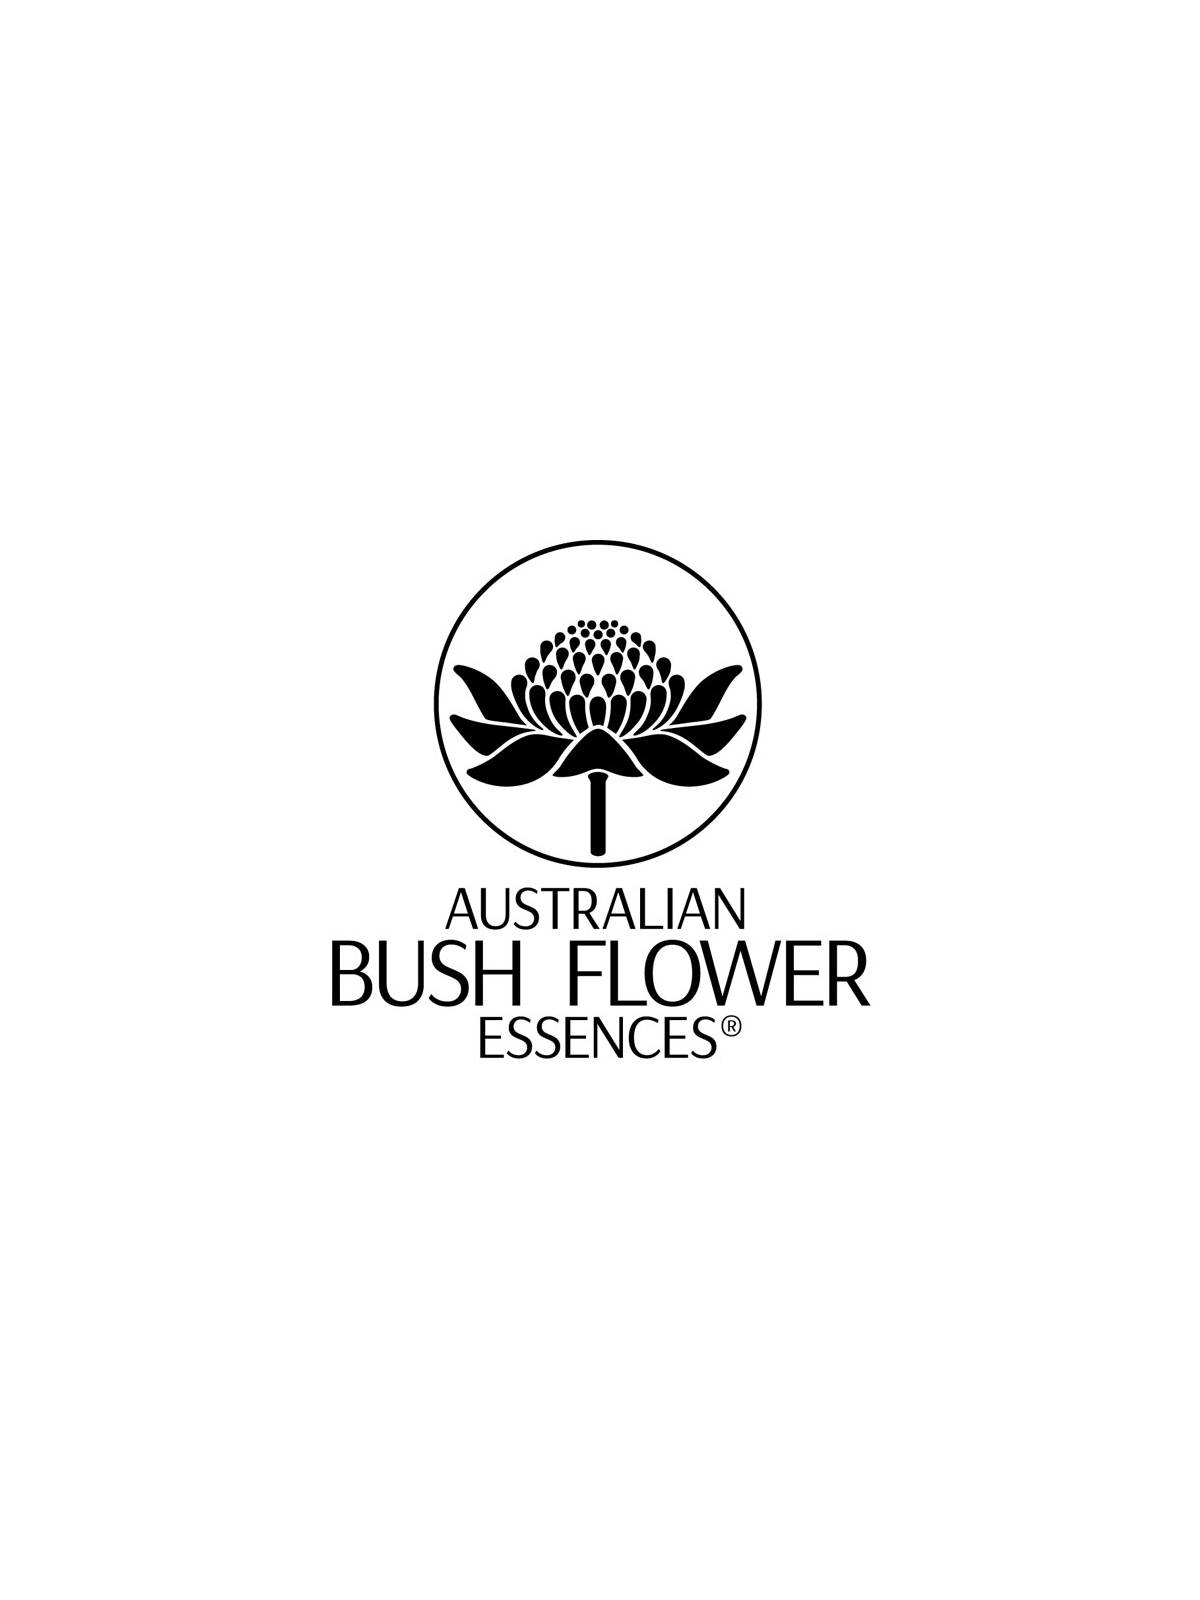 Transition Essence Australian Bush Flower Essences